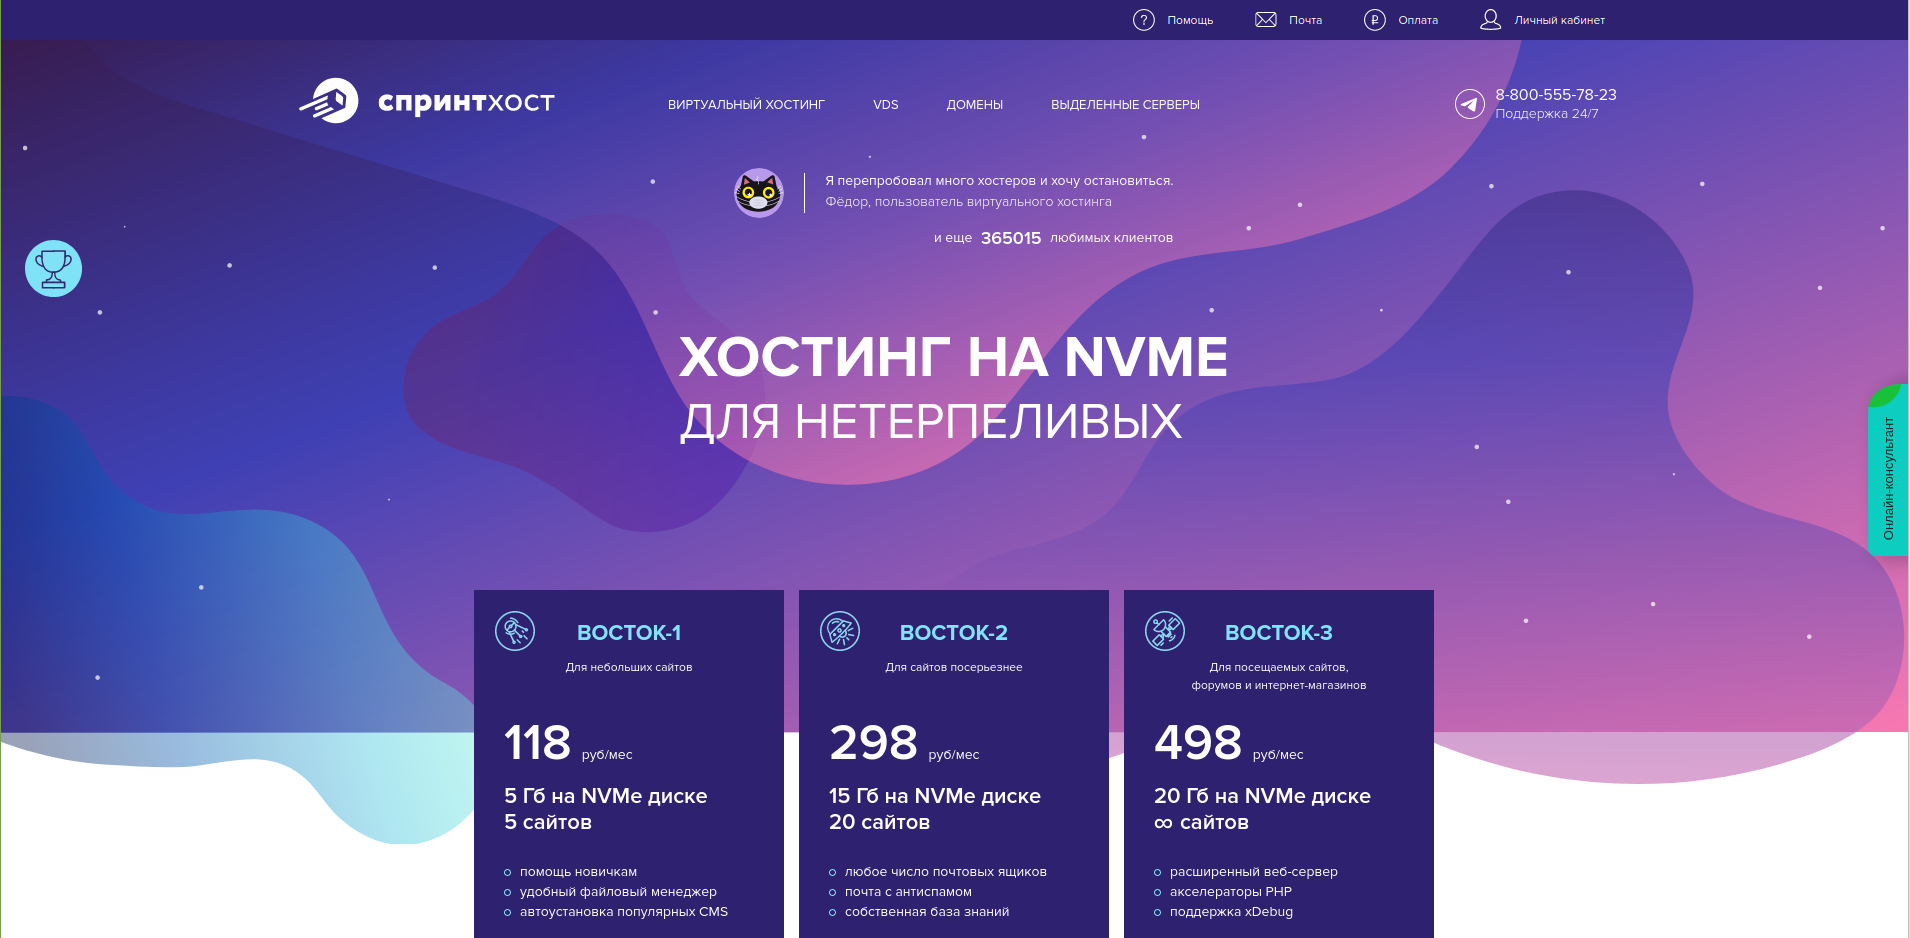 Главная страница хостинга Sprinthost.ru